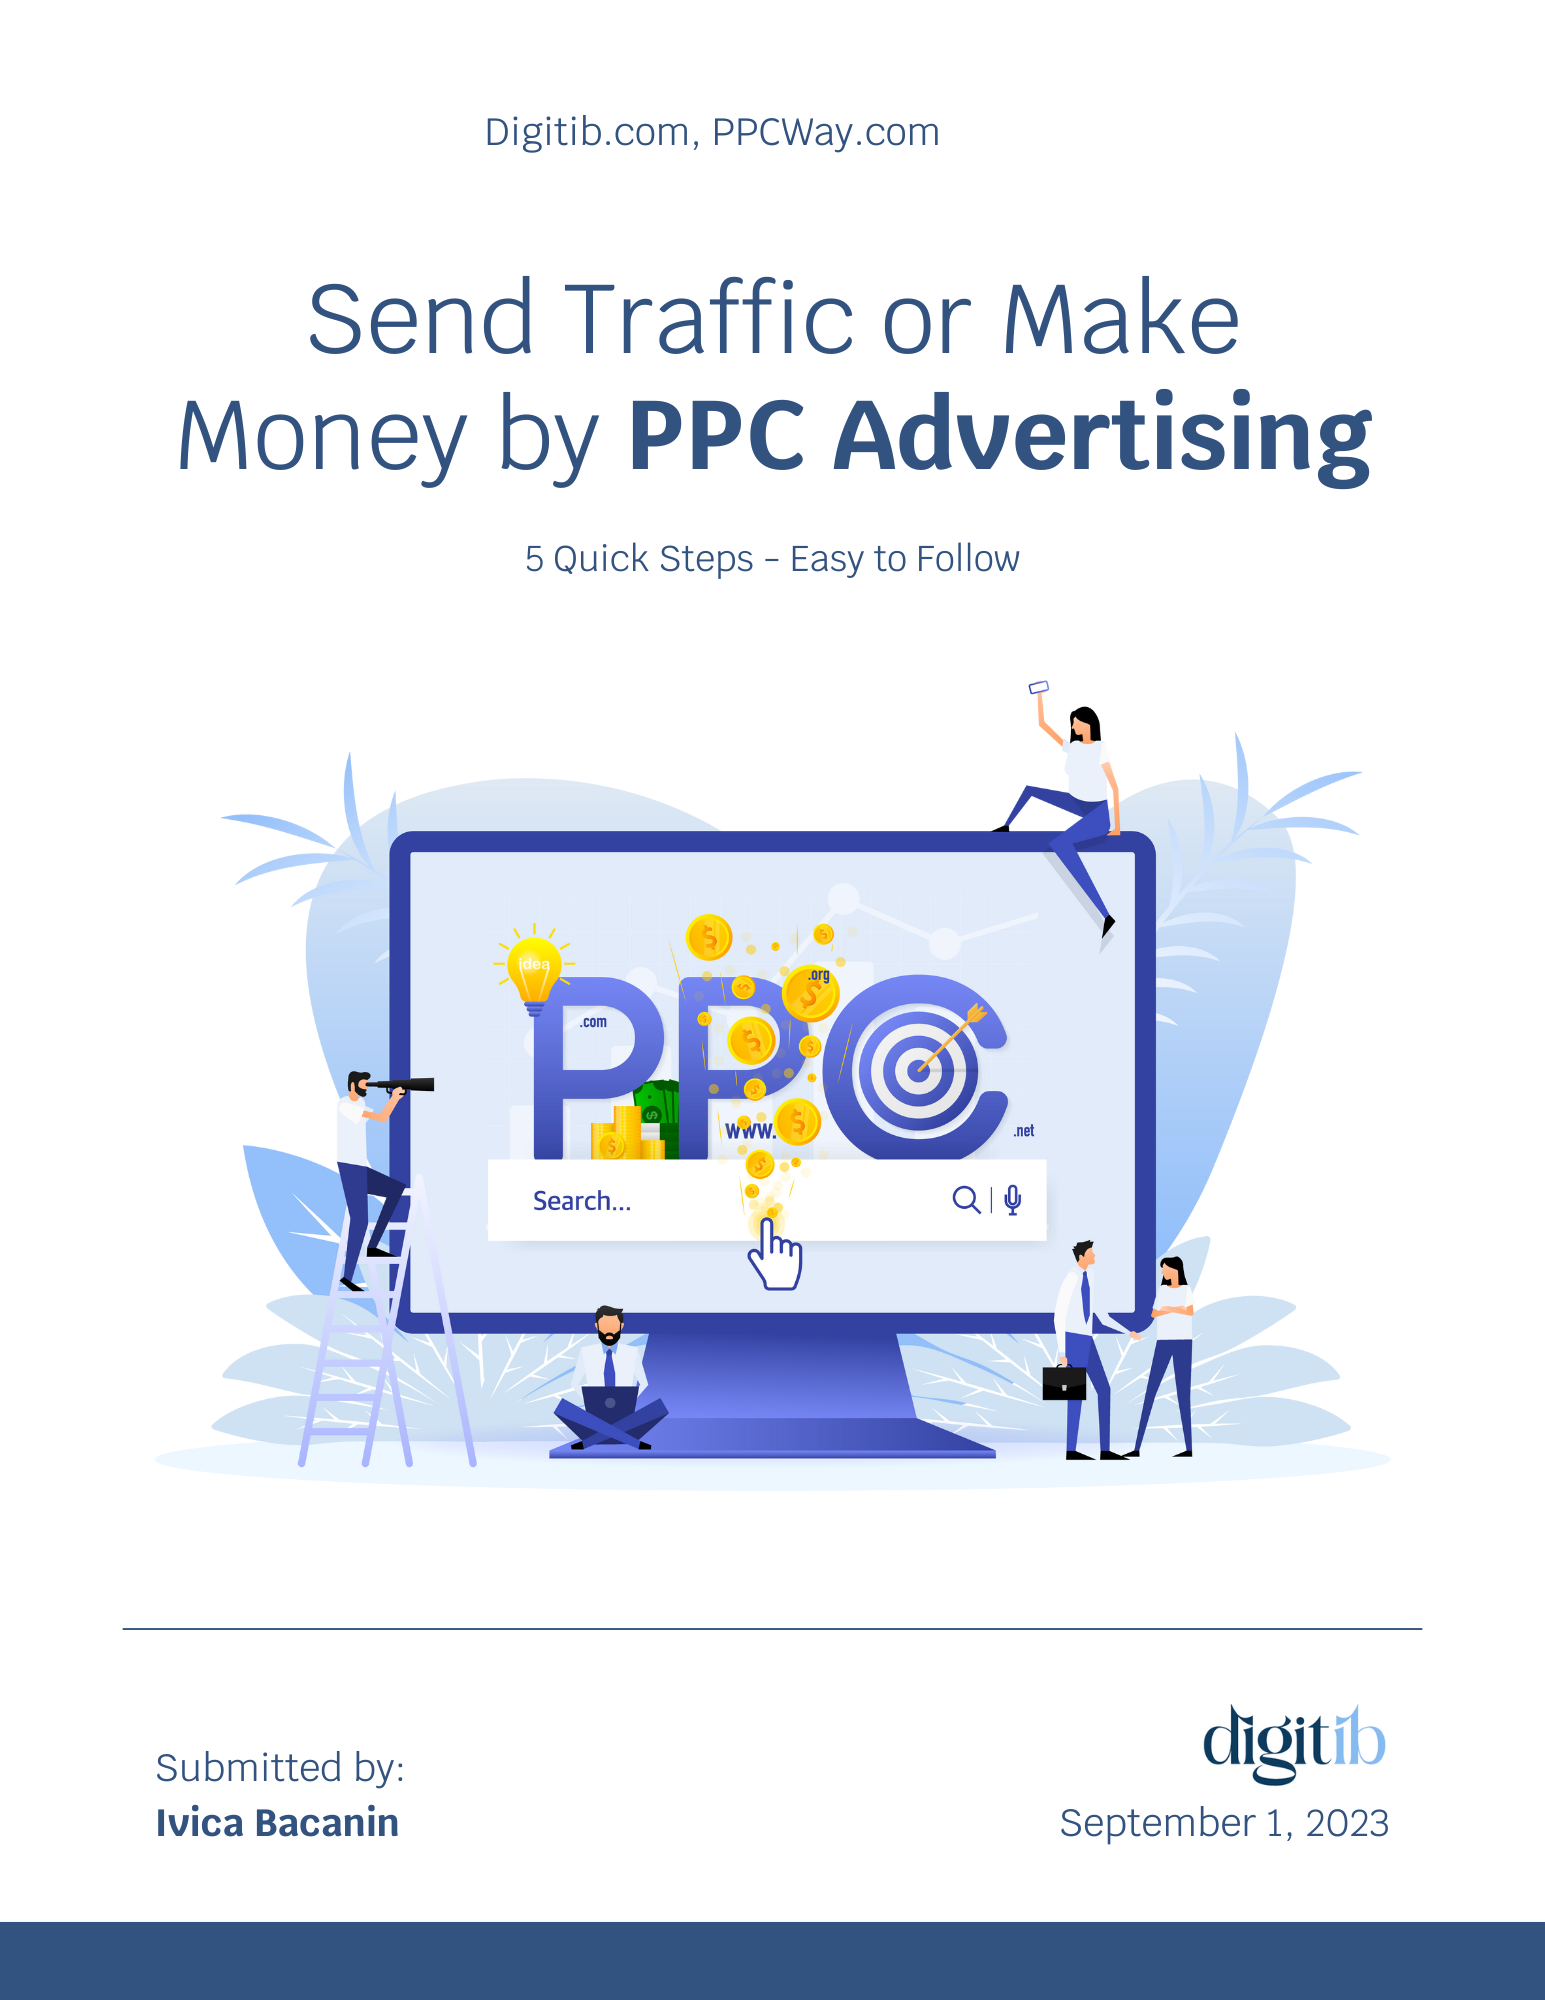 Send Traffic or Make Money by PPC Advertising